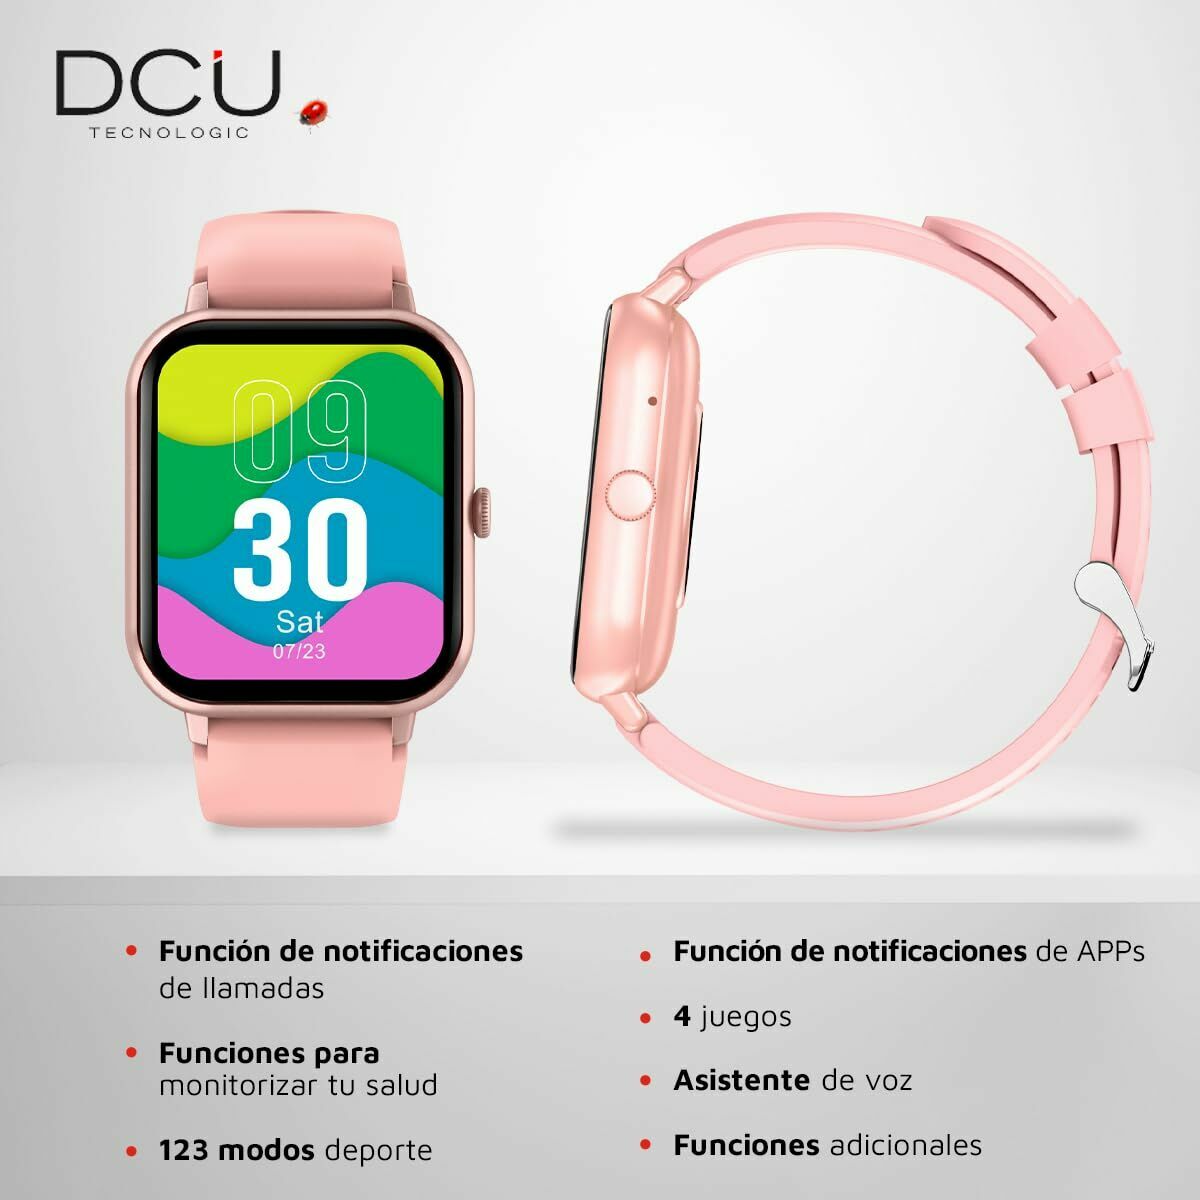 Kaufe Smartwatch DCU CURVED GLASS PRO Rosa bei AWK Flagship um € 53.00